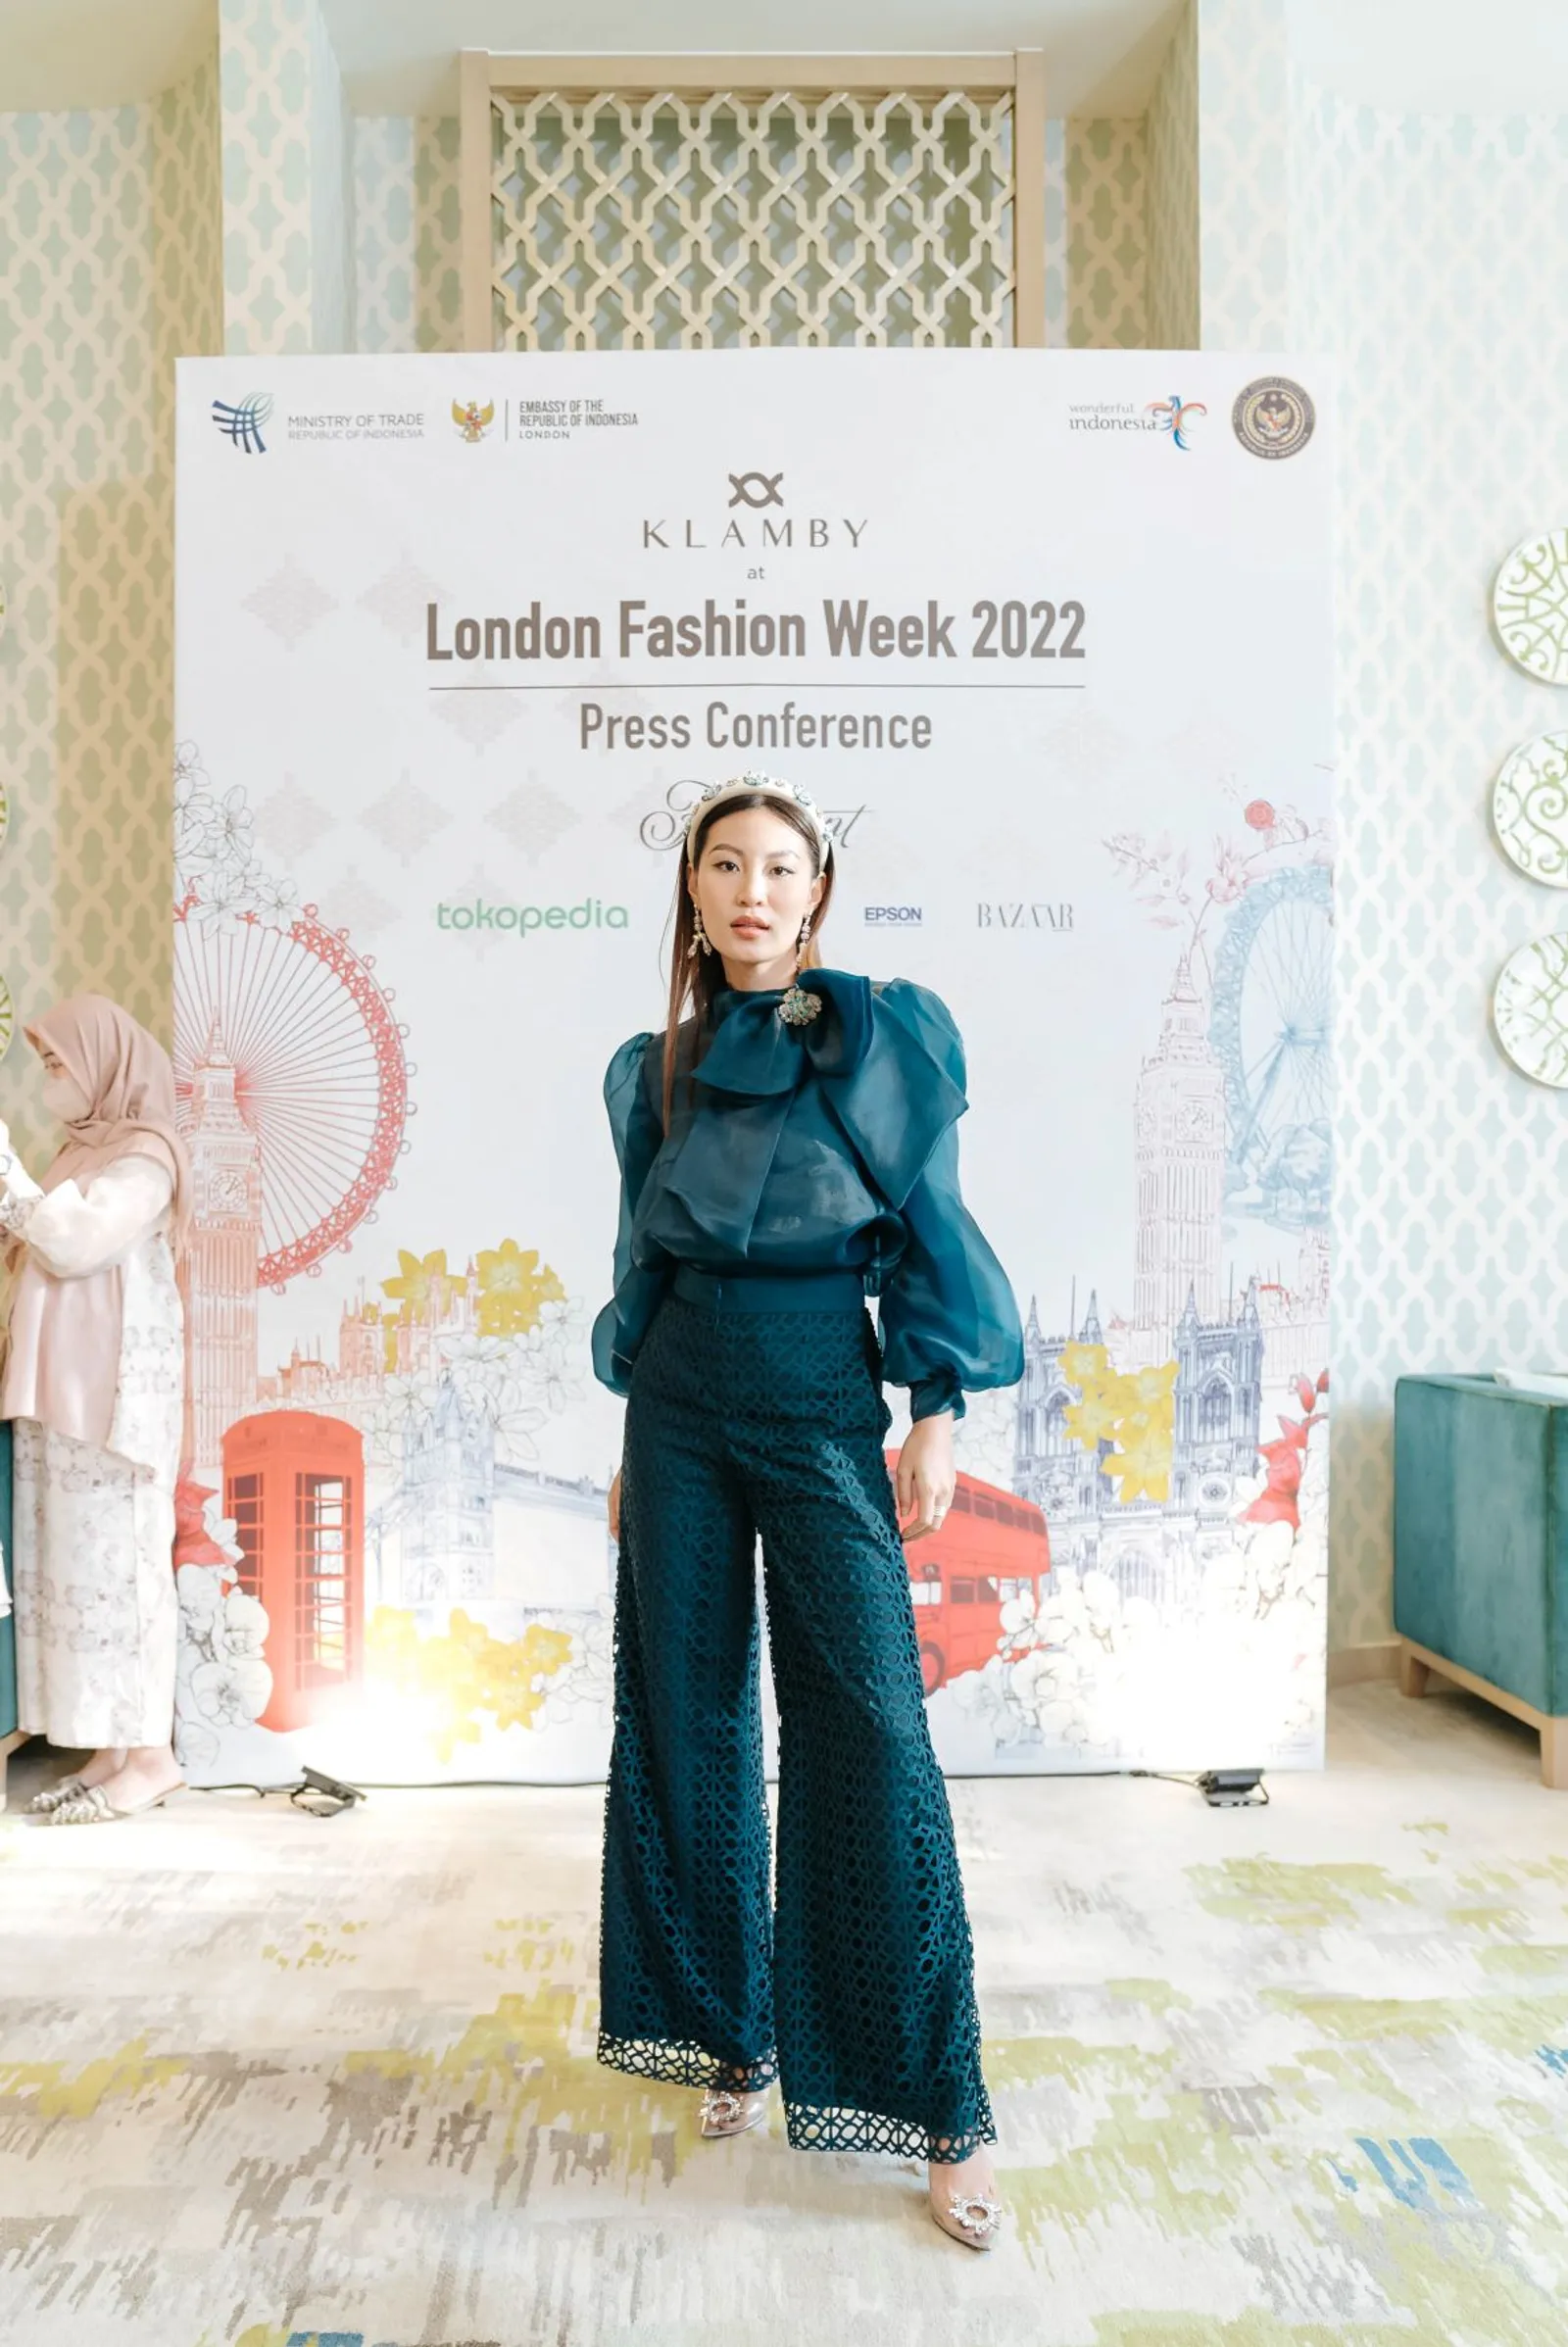 Klamby Siap Gelar Fashion Show di London Fashion Week 2022